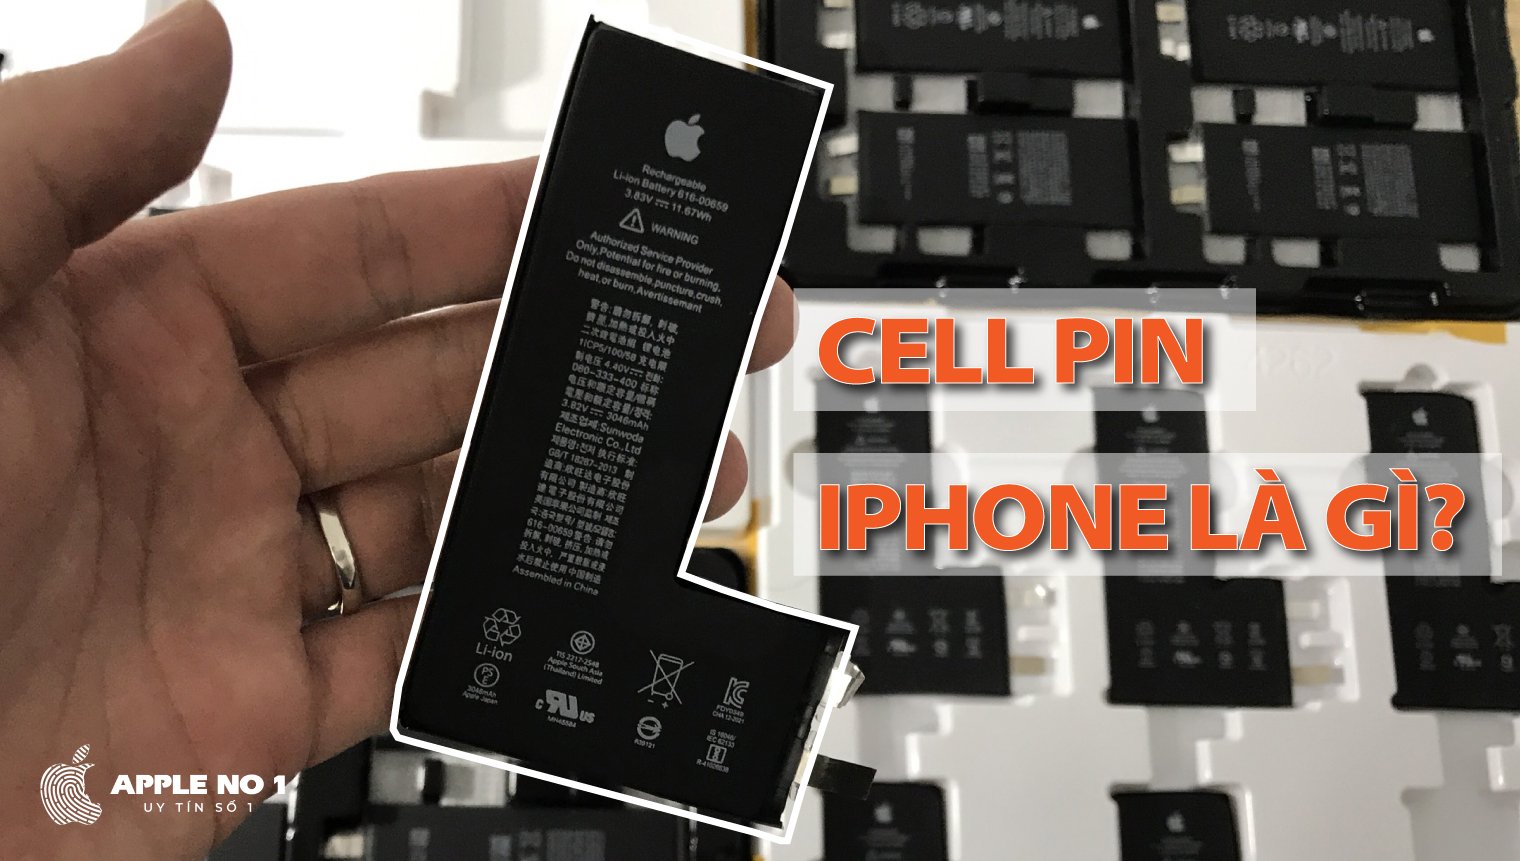 Cell pin iPhone la gi? Co nen thay Cell pin iPhone khong?